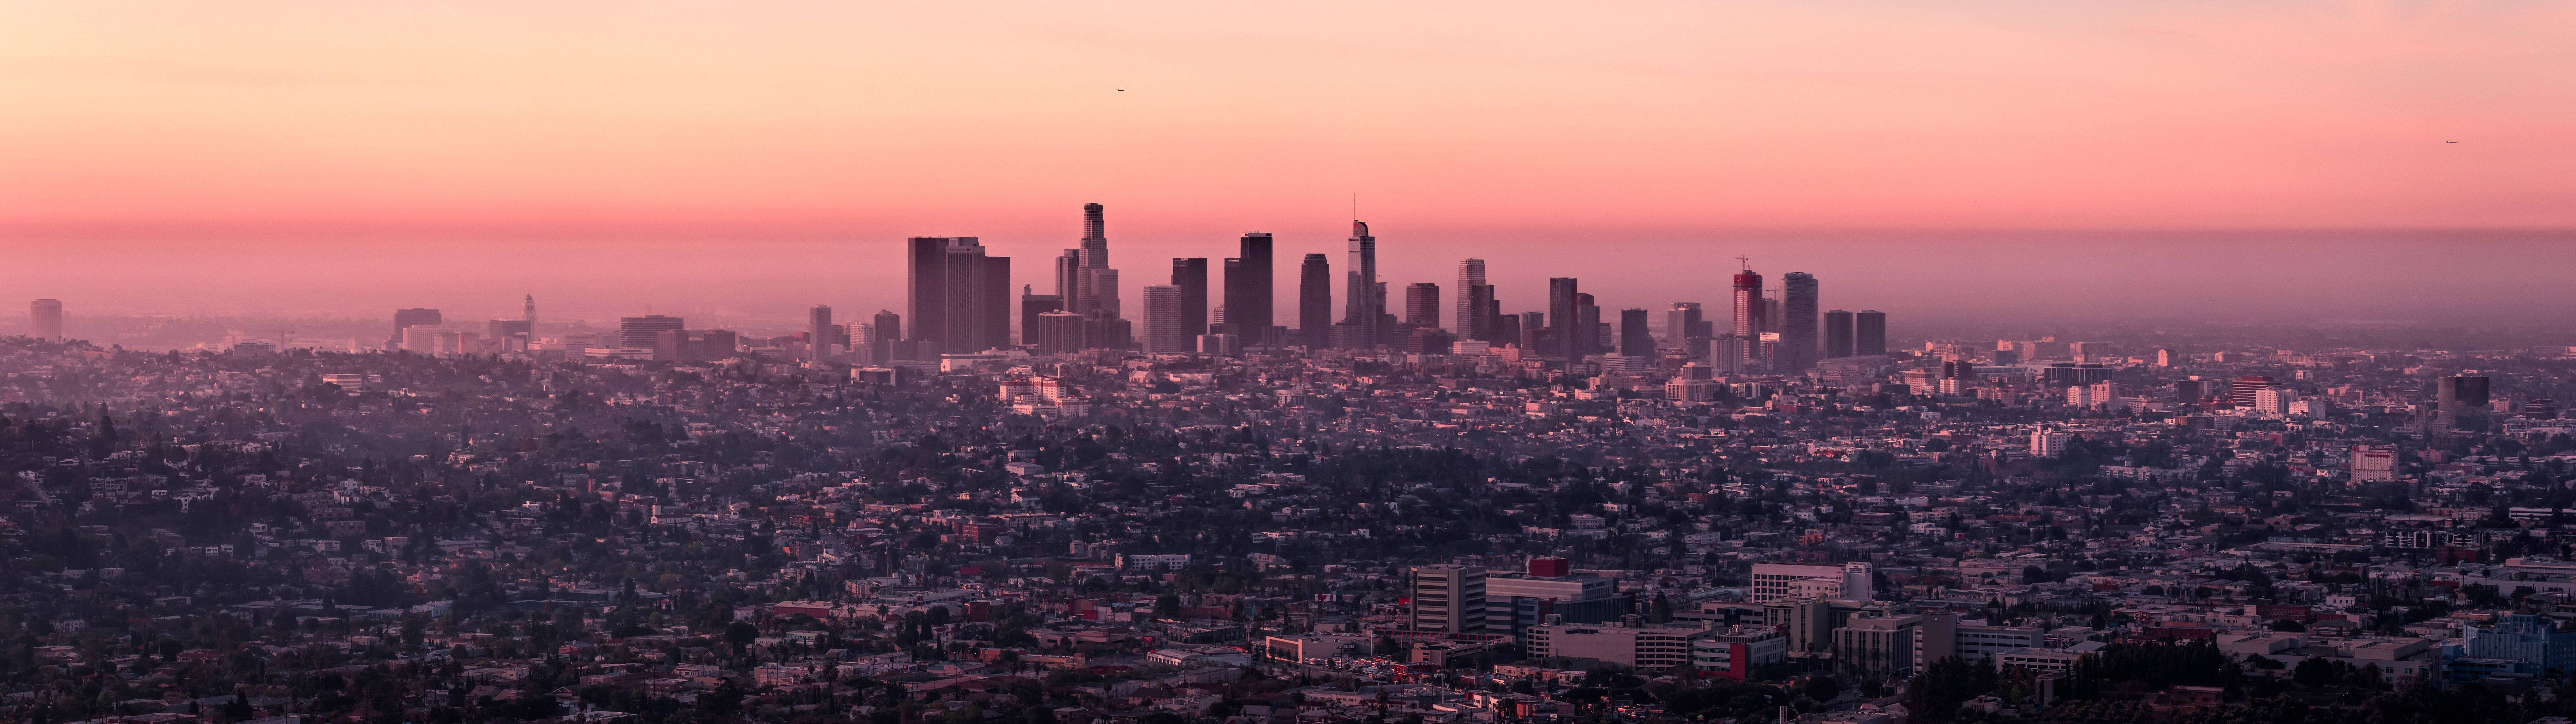 Panorama Of Los Angeles 4k